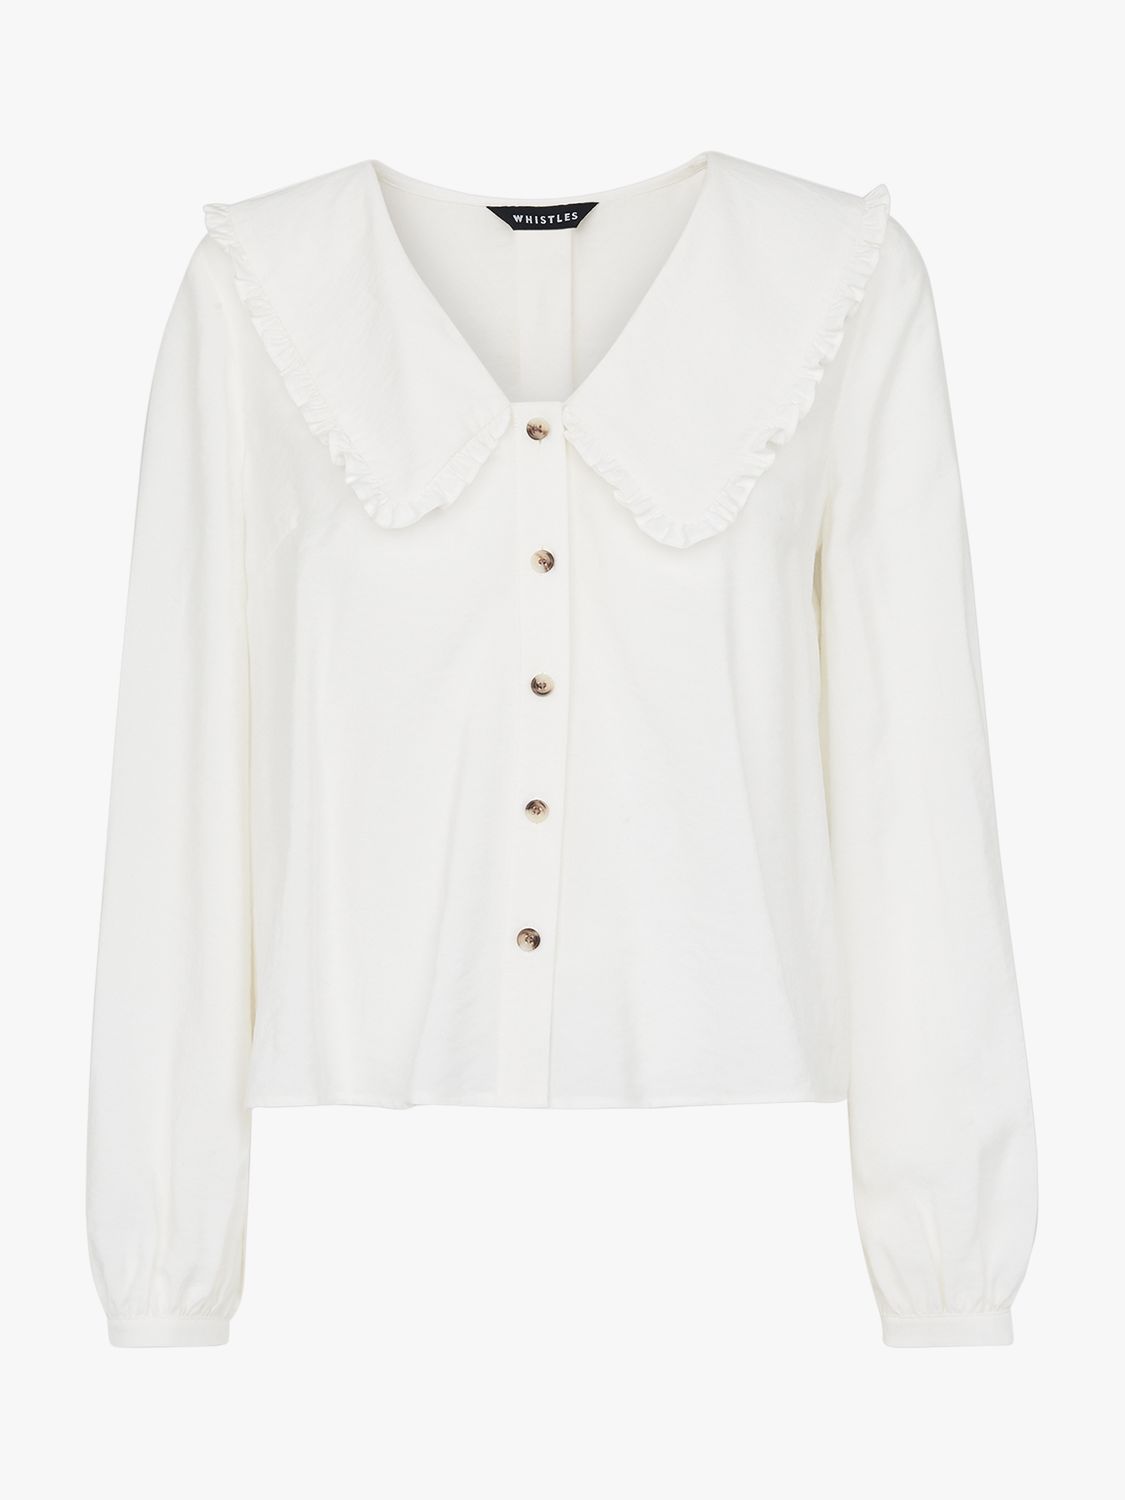 Whistles Oversized Collar Blouse, White at John Lewis & Partners